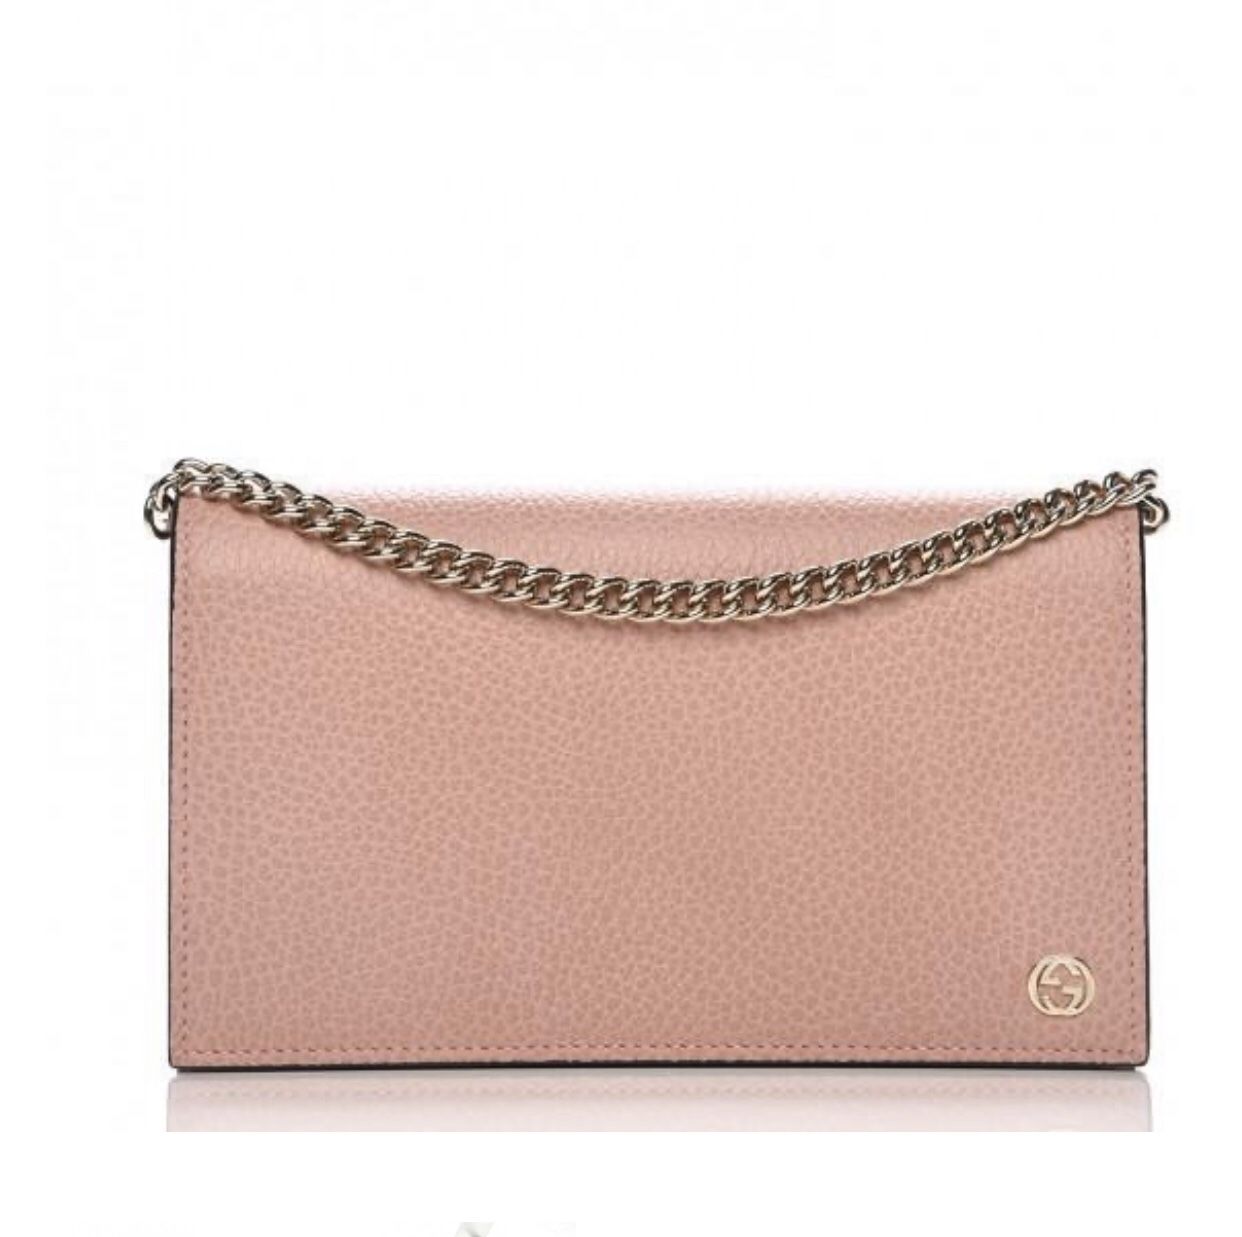 GUCCI 466506 Interlocking G Leather Crossbody Bag Wallet, Pink